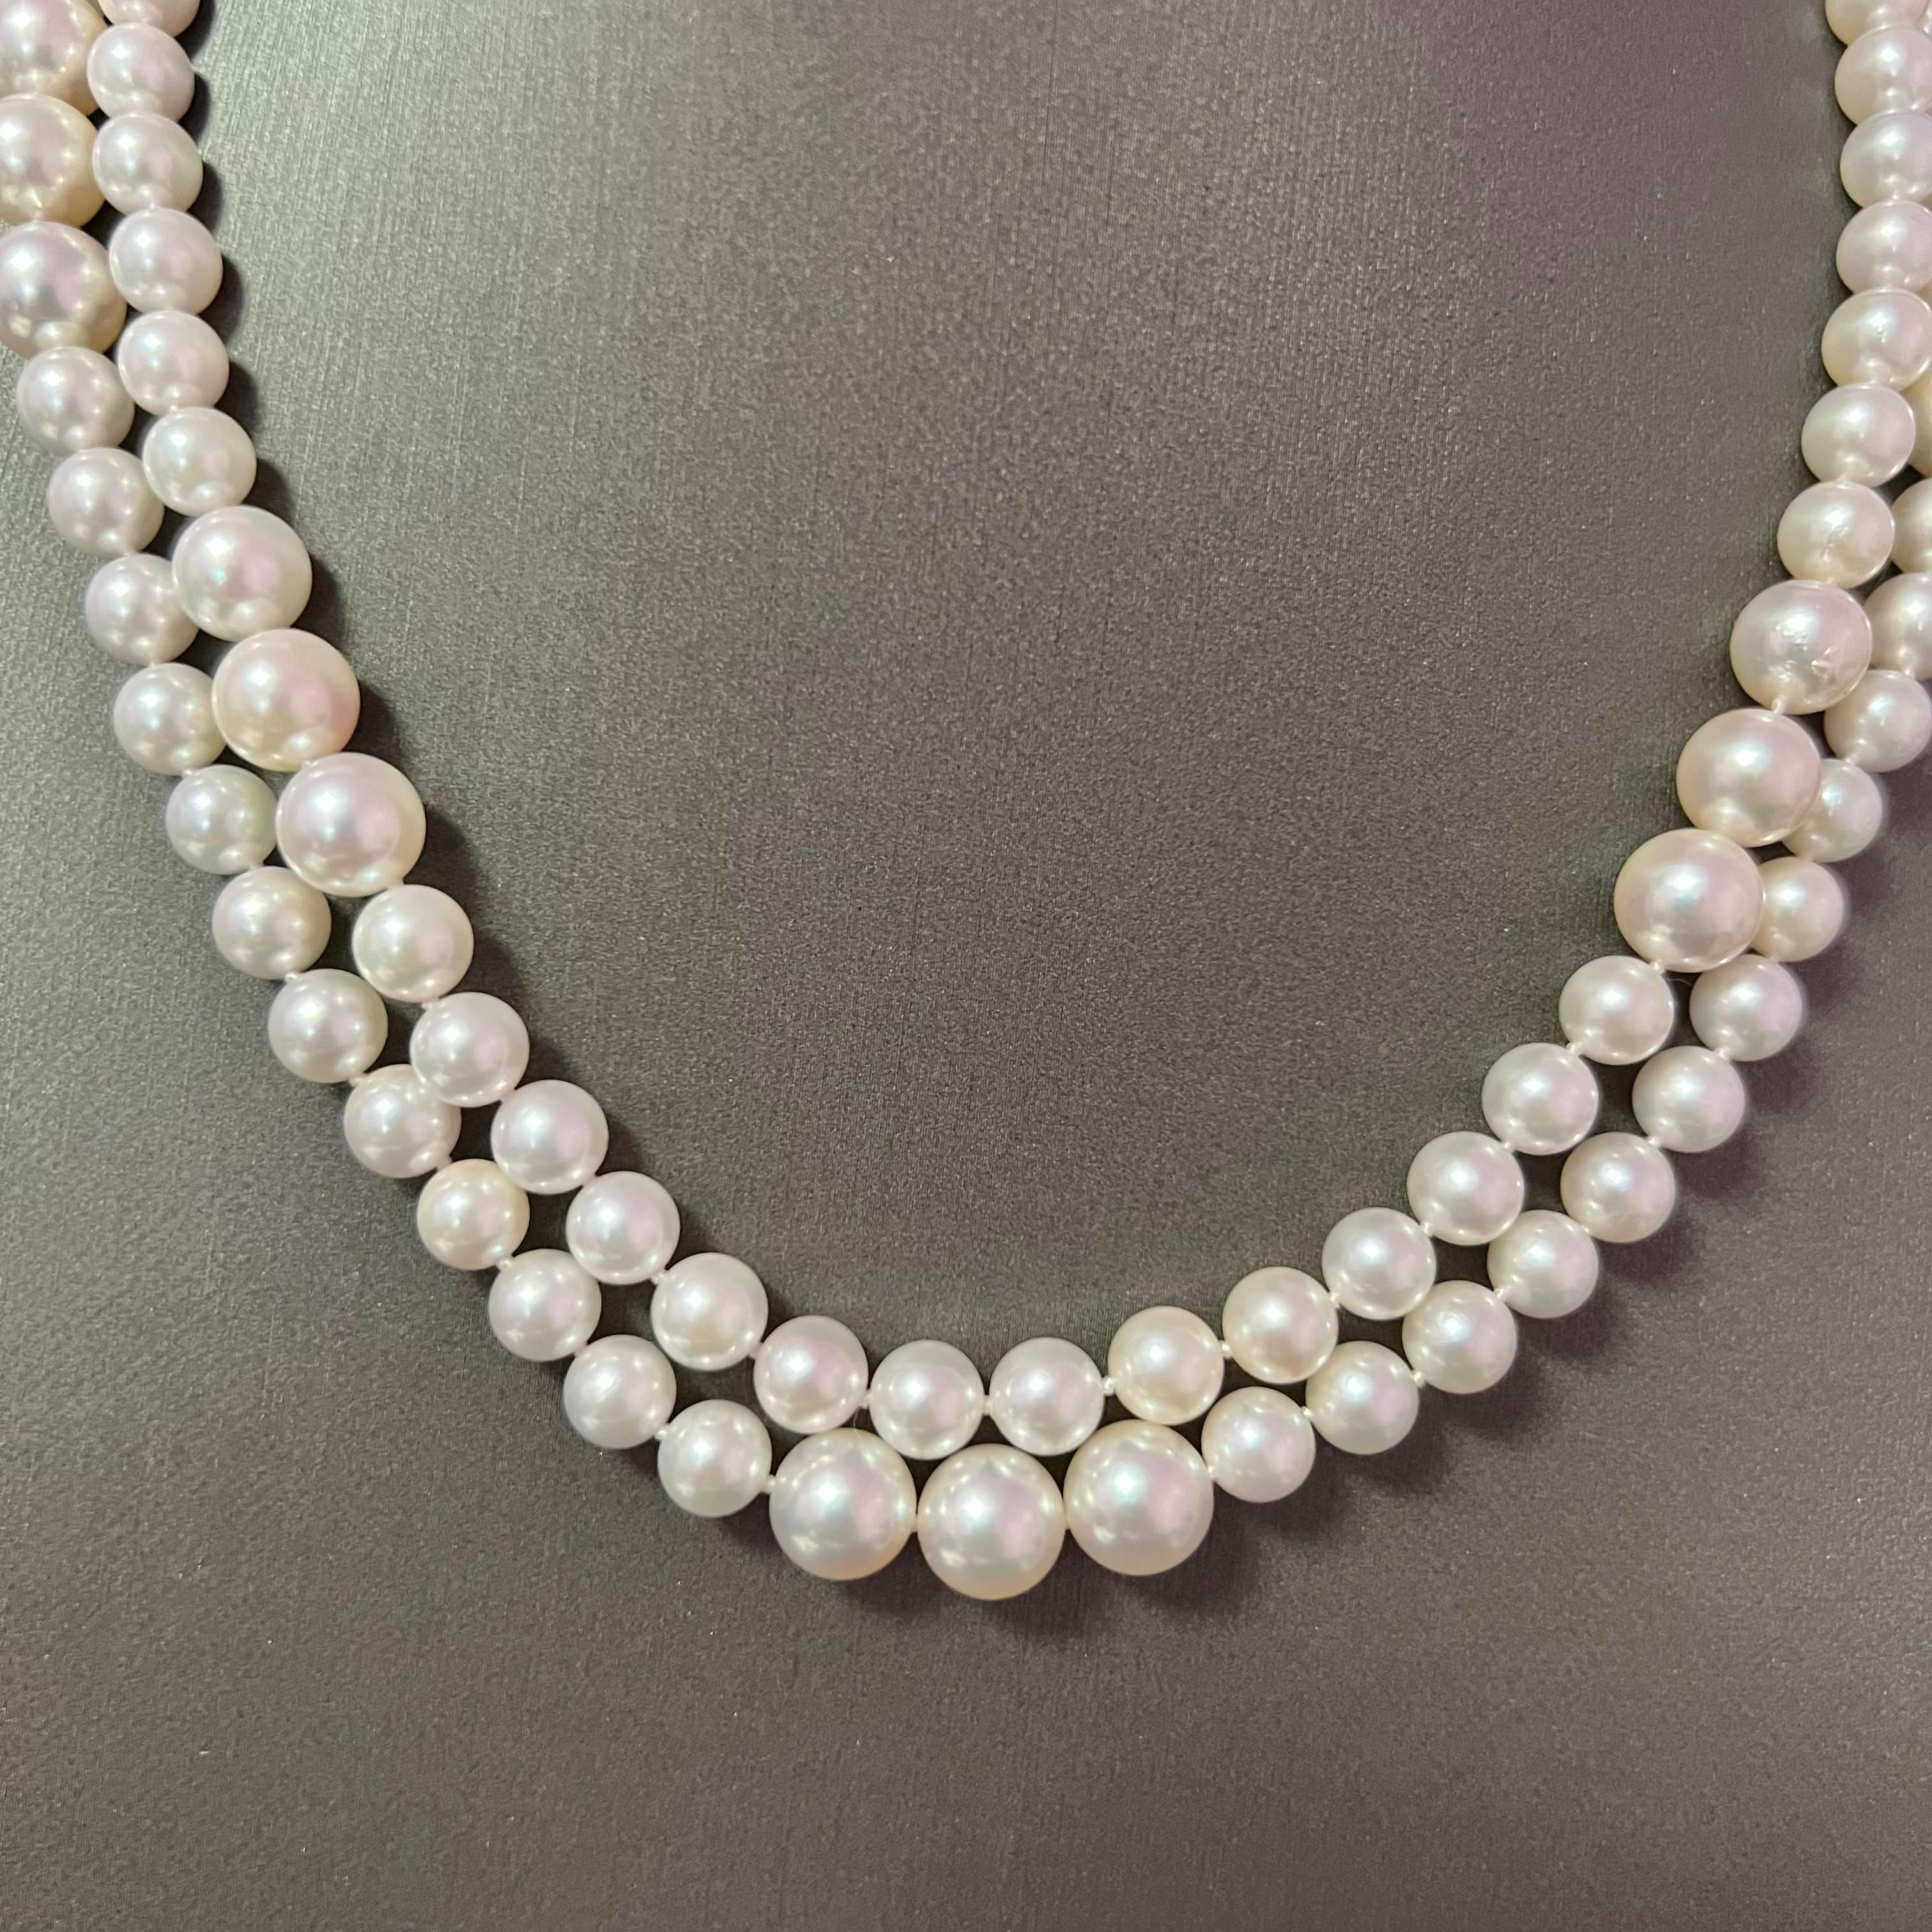 Brilliant Cut Akoya Pearl Diamond Necklace 14k W Gold 0.66 TCW Certified For Sale